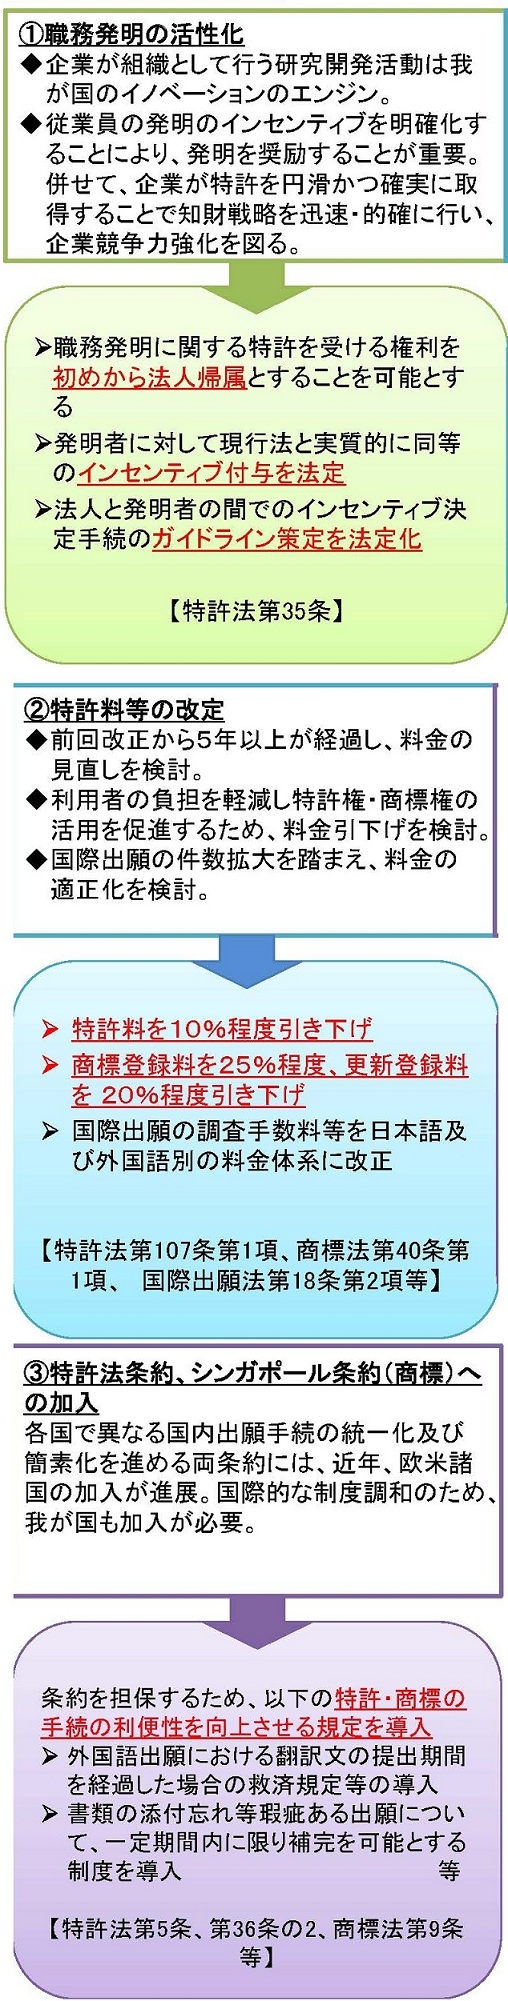 【日本】 平成27年改正特許法等の施行決定　平成28年4月1日より適用